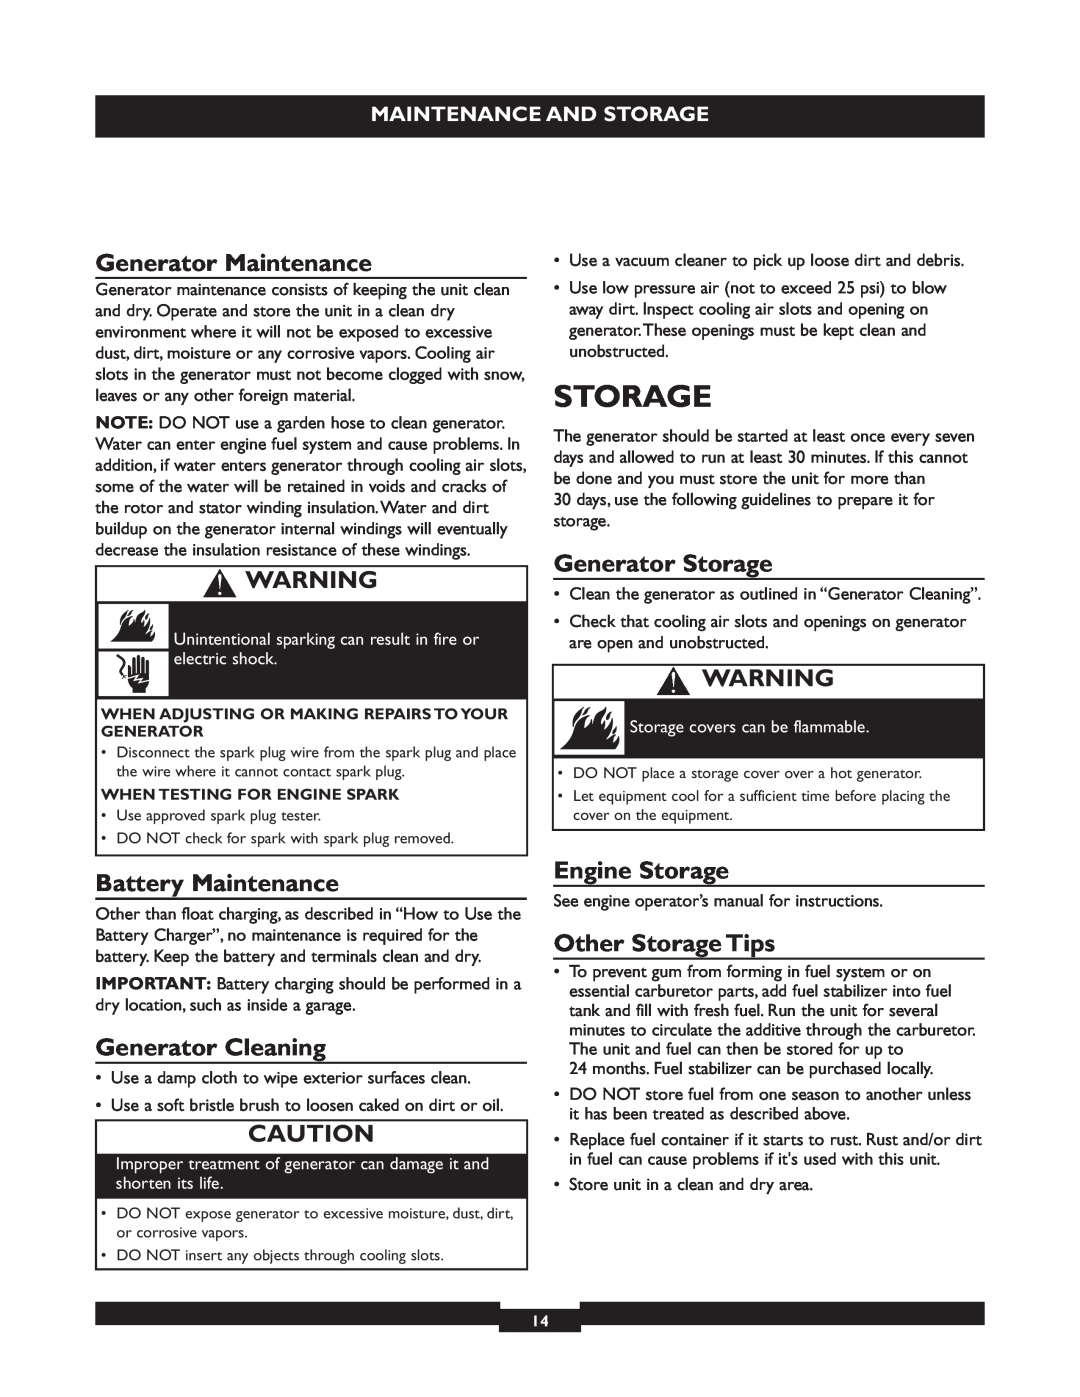 Briggs & Stratton 30205 manual Generator Maintenance, Generator Storage, Battery Maintenance, Generator Cleaning 